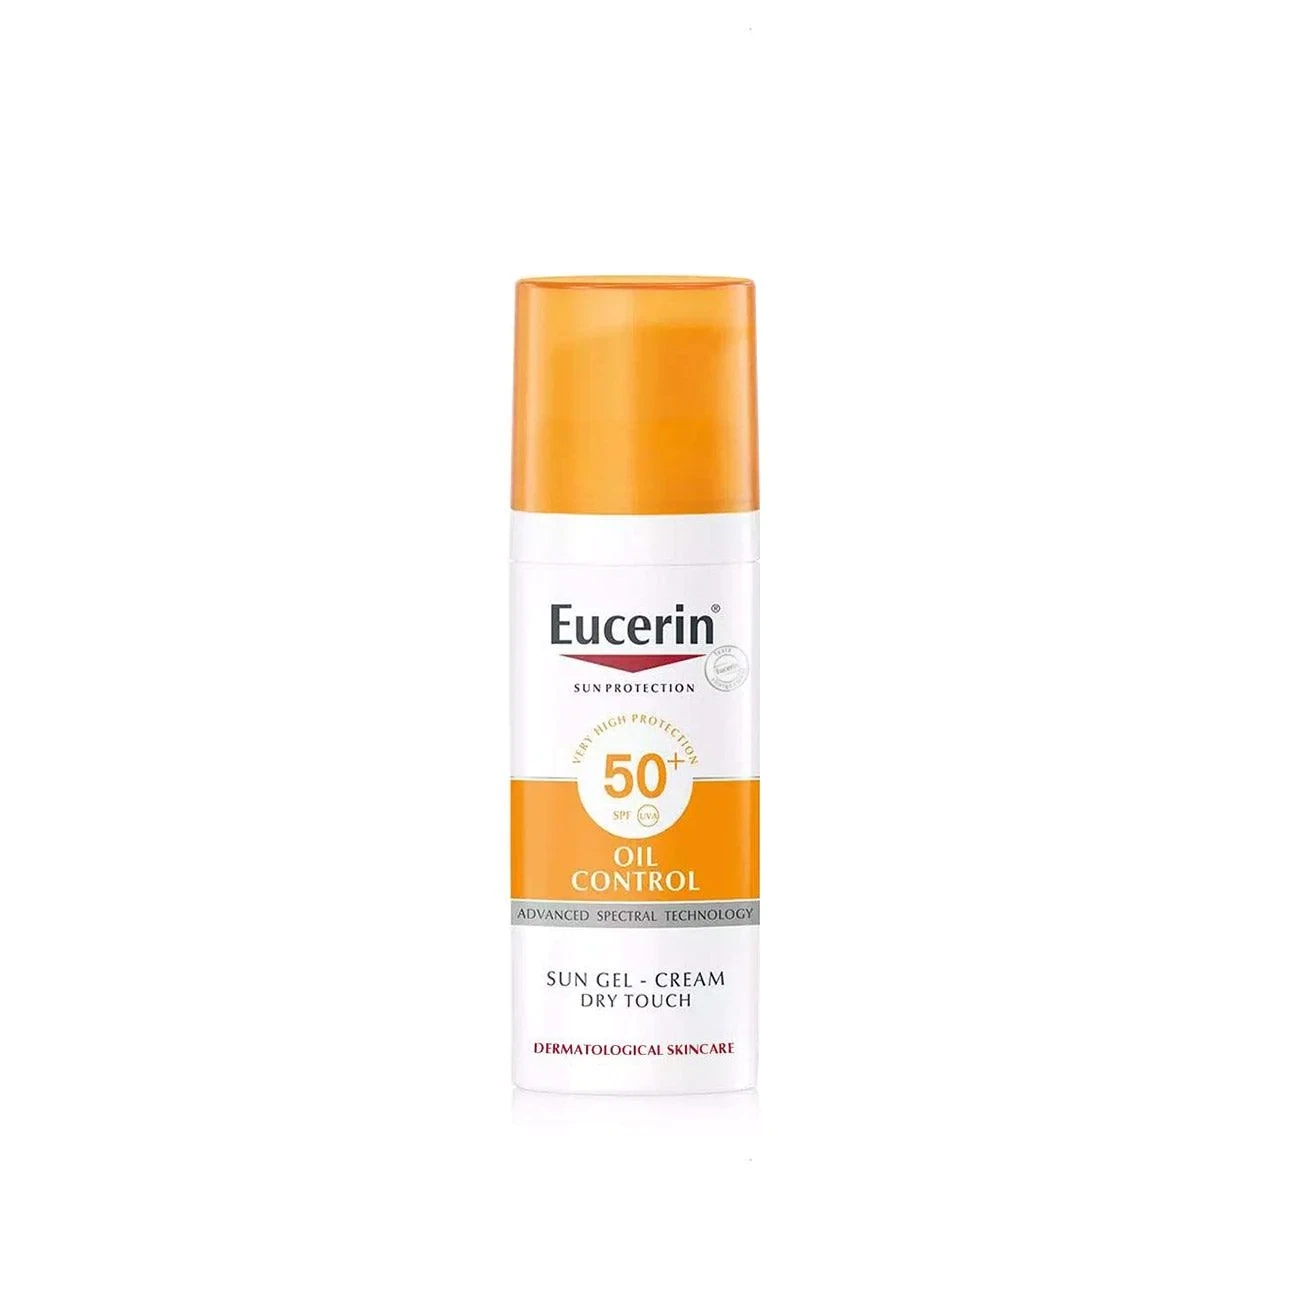 EUCERIN - Sun Protection Oil Control Sun Gel Cream SPF50+ Dry Touch